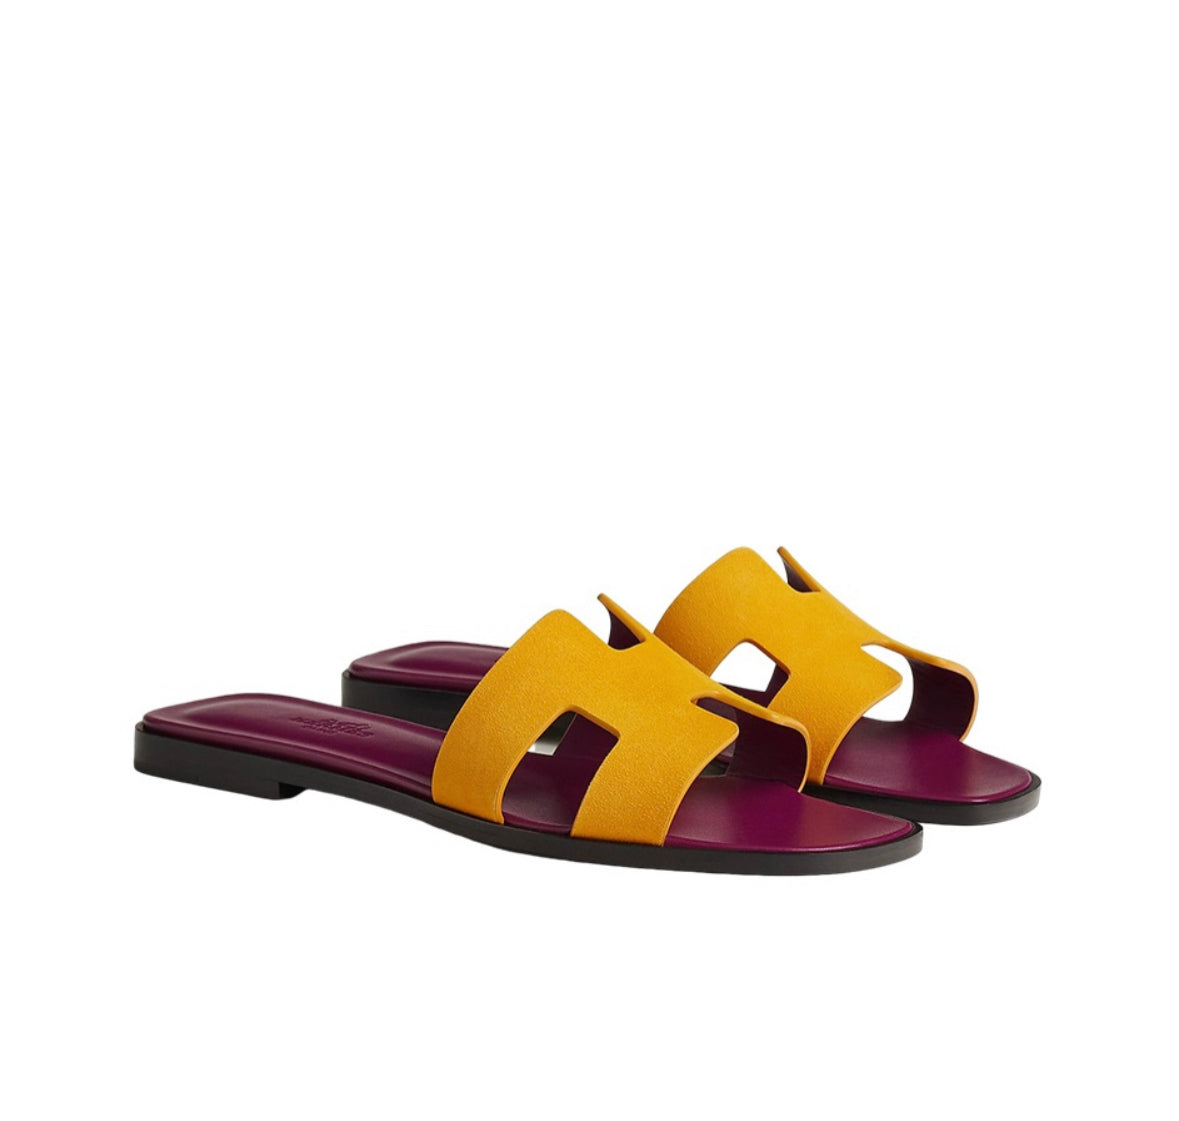 Hermes Oran Sandals “Maroon/Yellow”